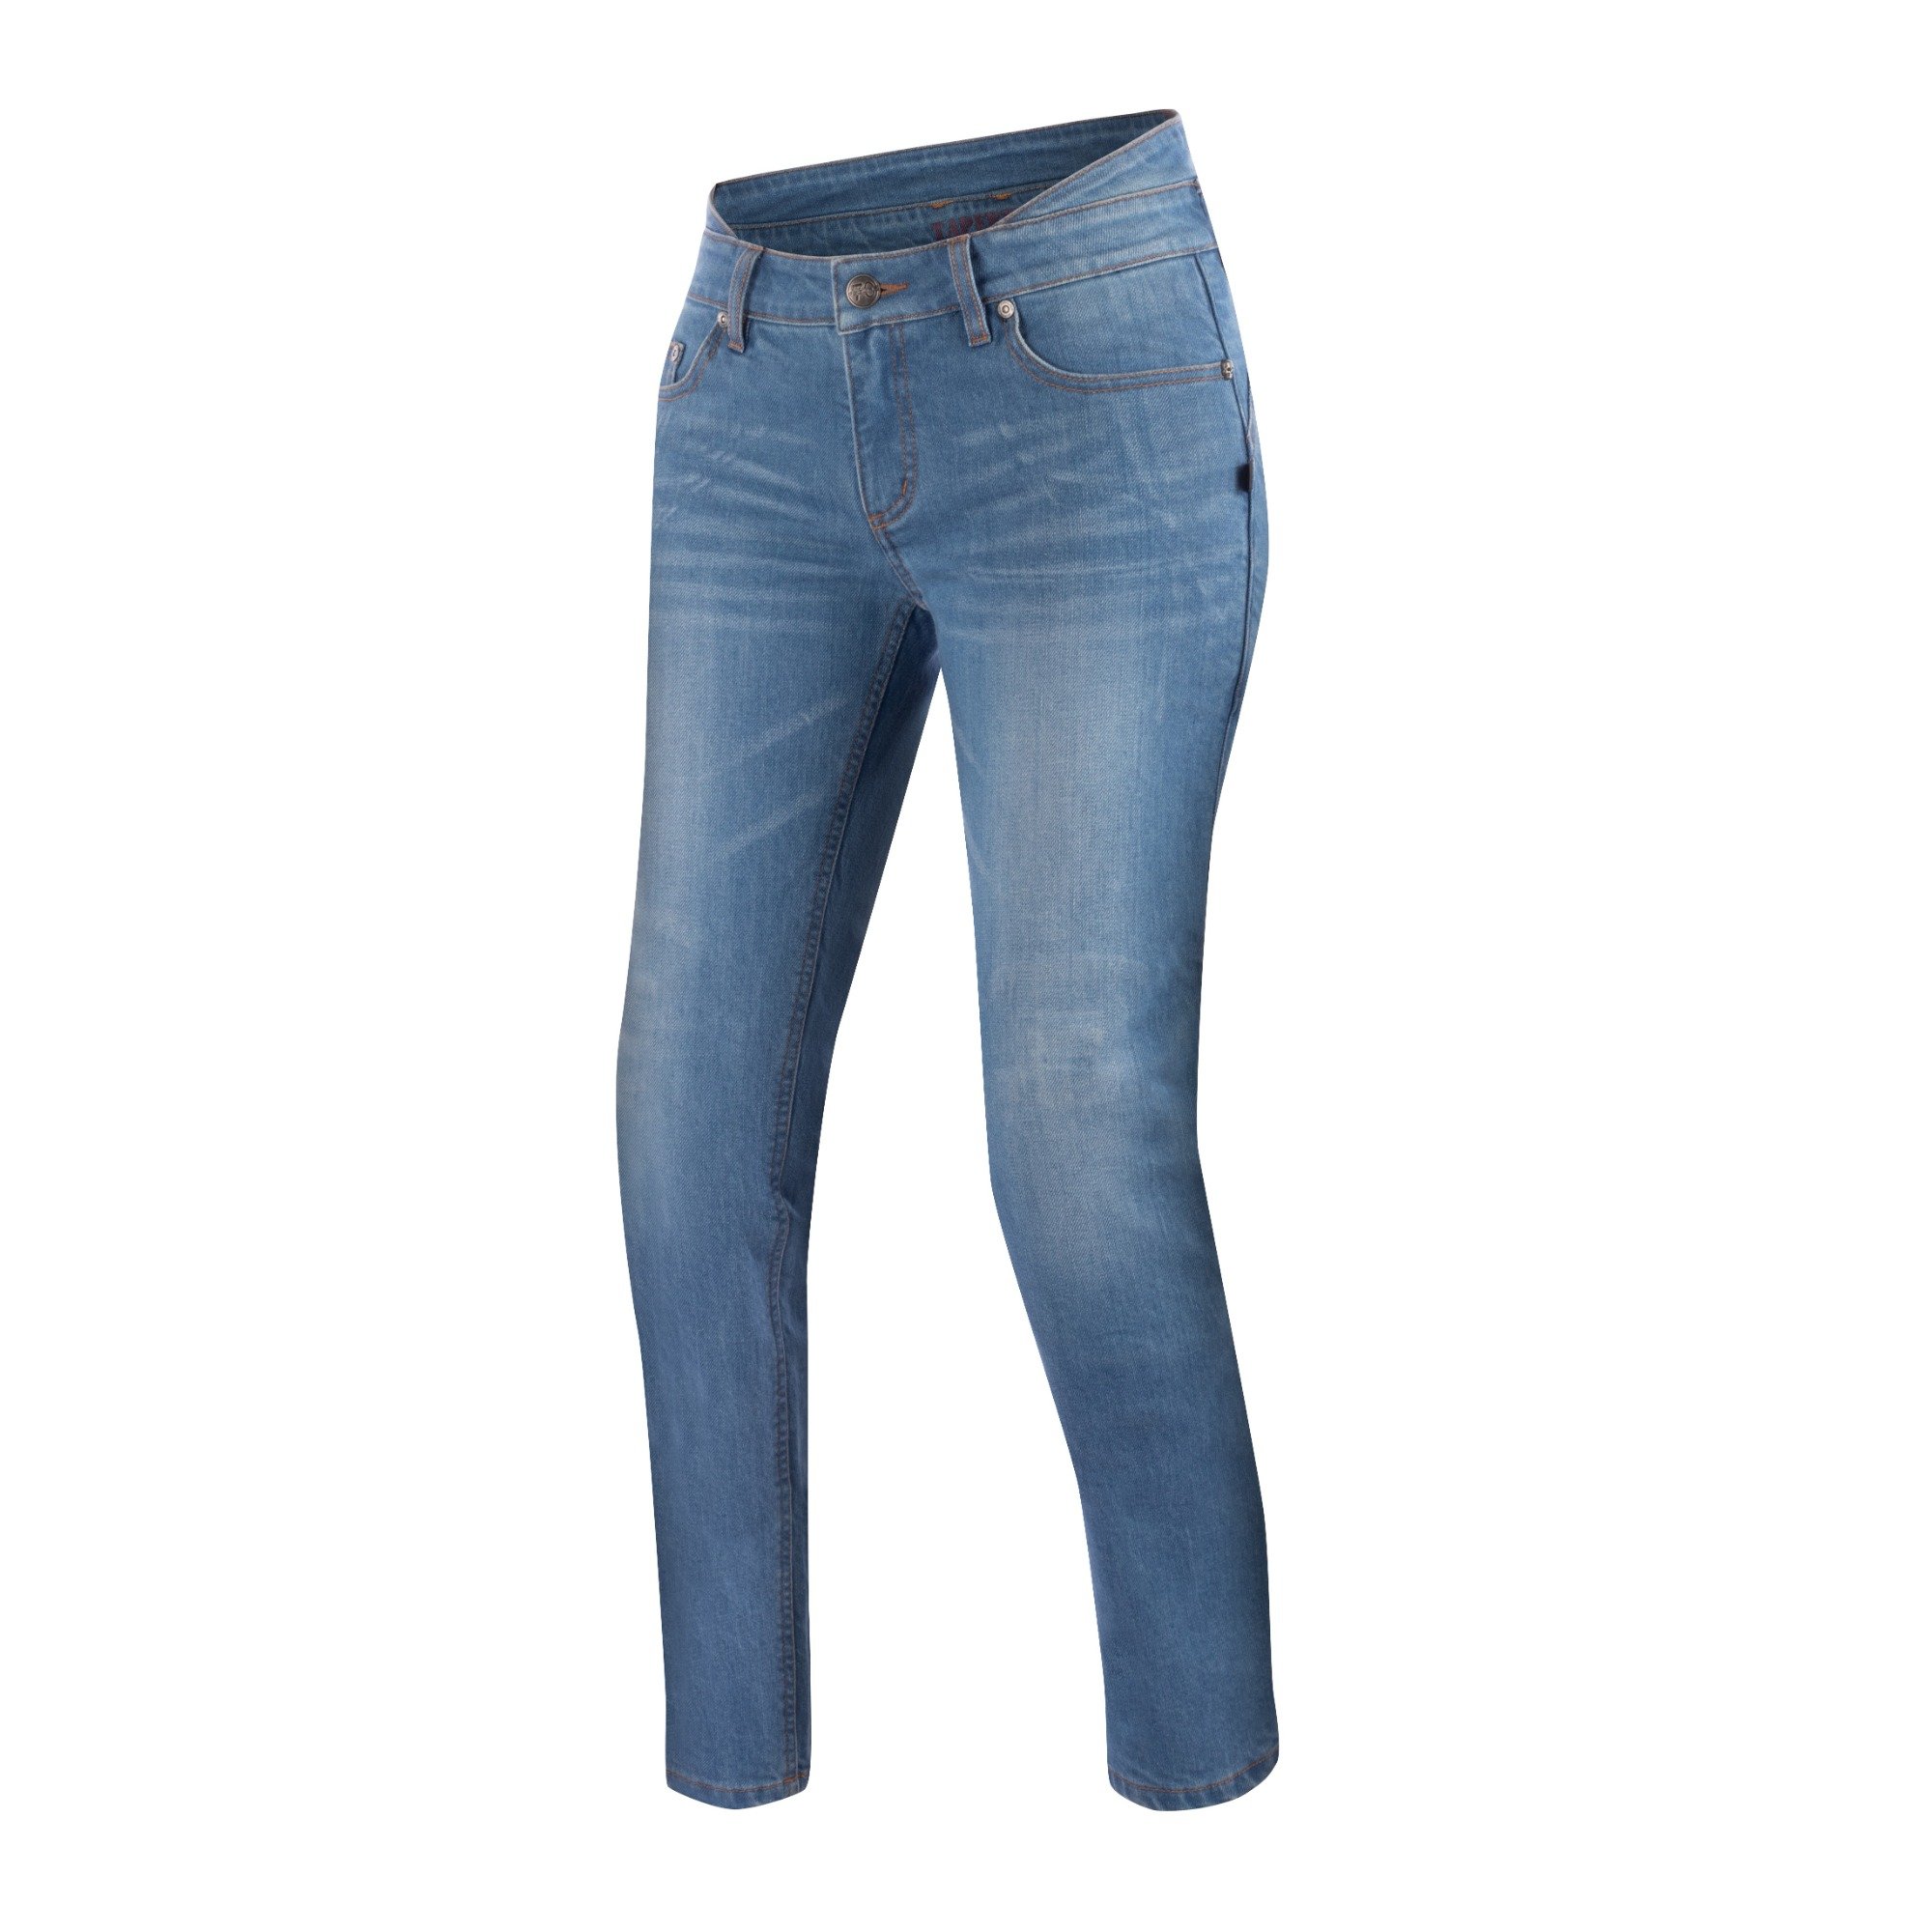 Image of Segura Trousers Lady Rosco Blue Size T1 ID 3660815168134